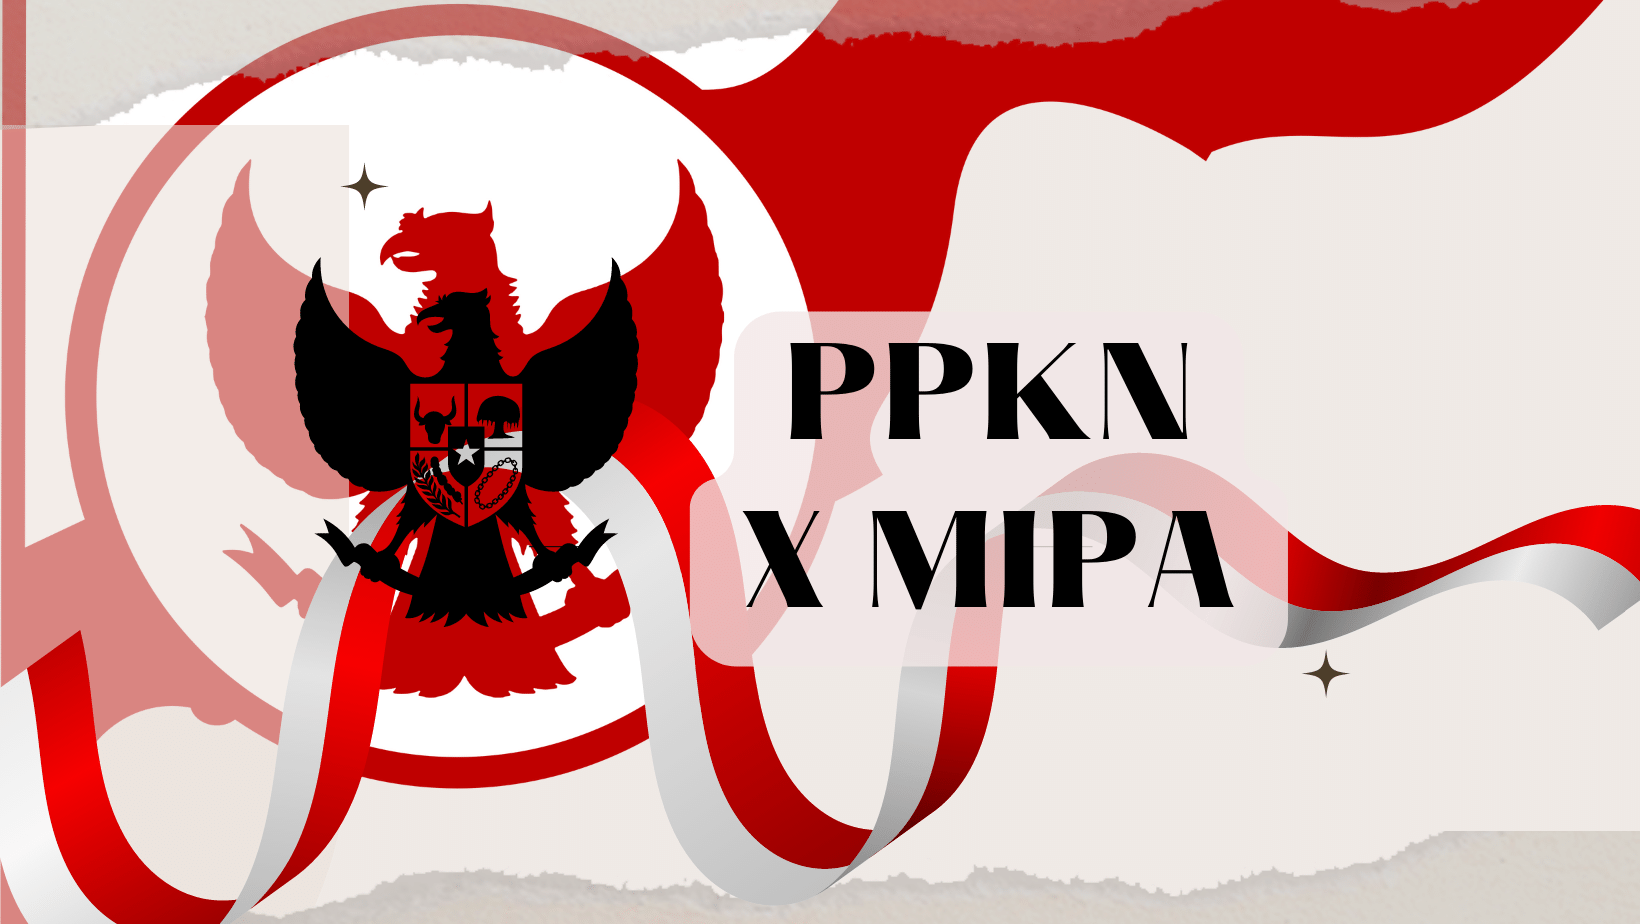 PPKN X MIPA 3 2022